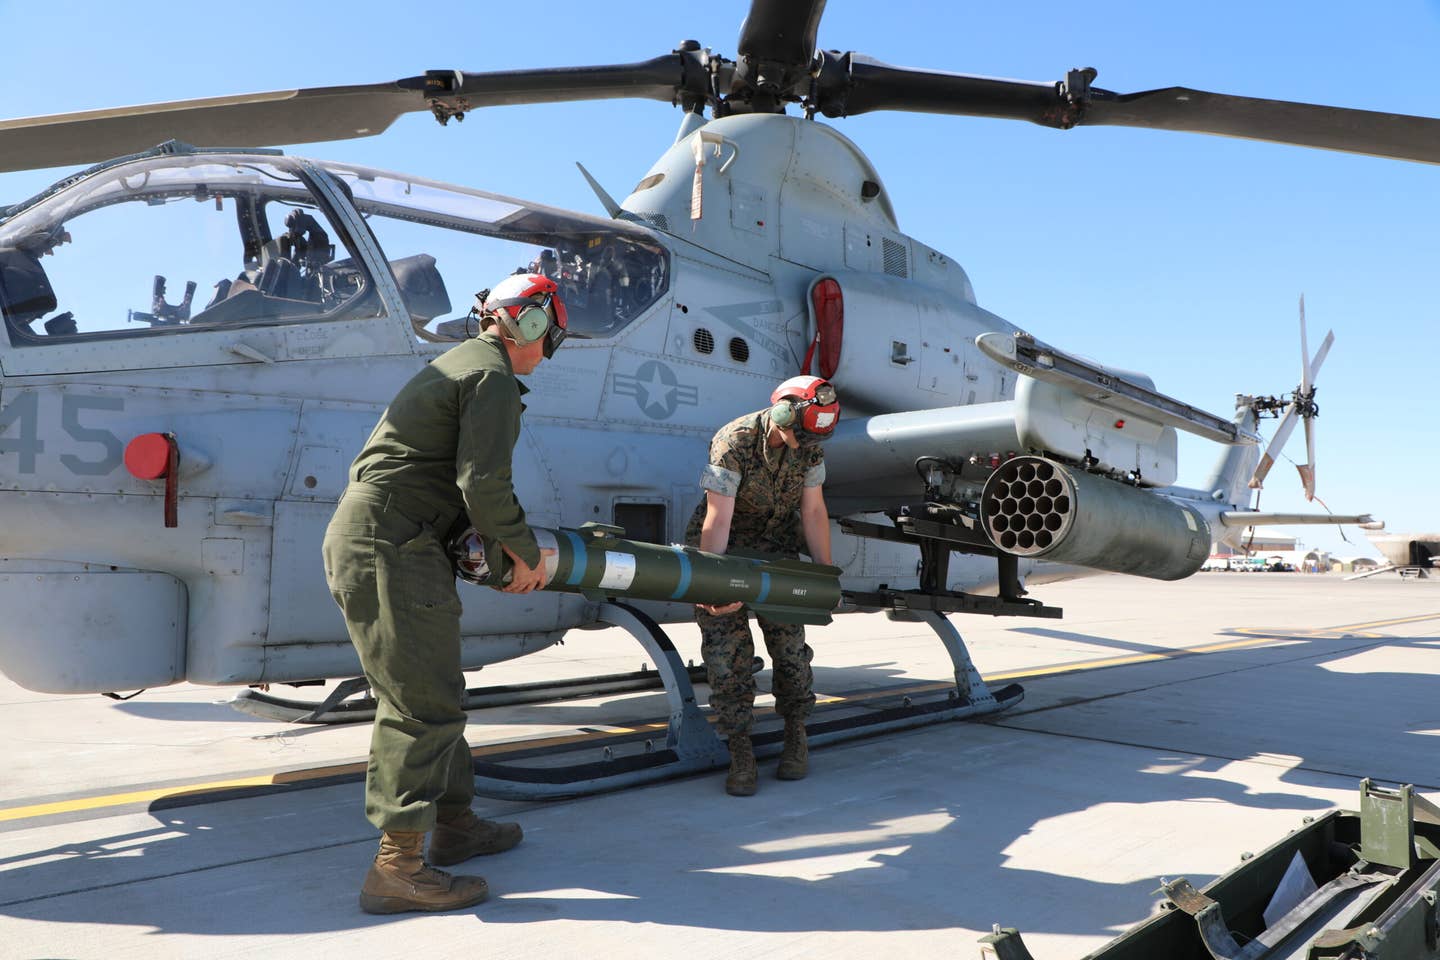 Marines arm an VMX-1 AH-1Z at MCAS Yuma. (Author's image)